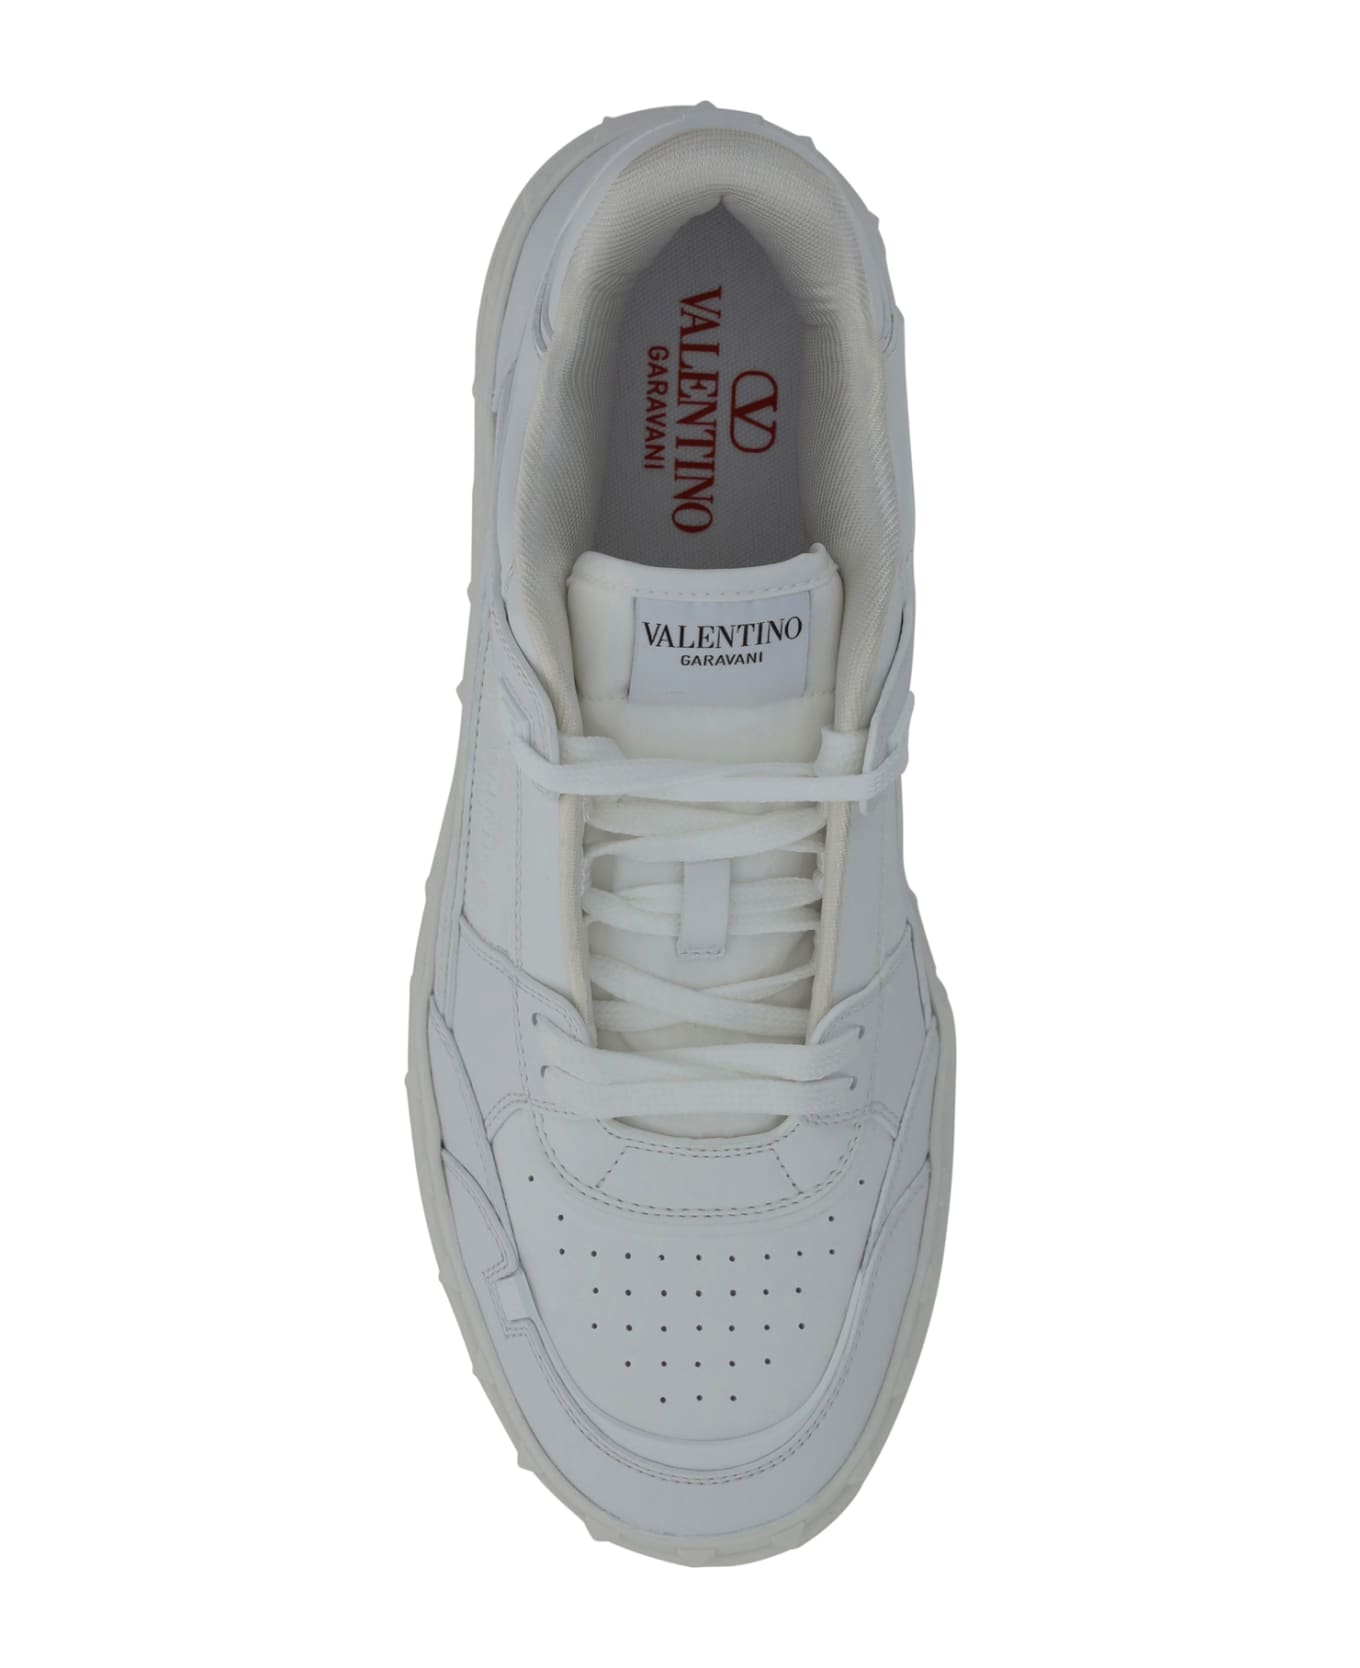 Valentino Garavani Freedots Sneakers - Bianco スニーカー